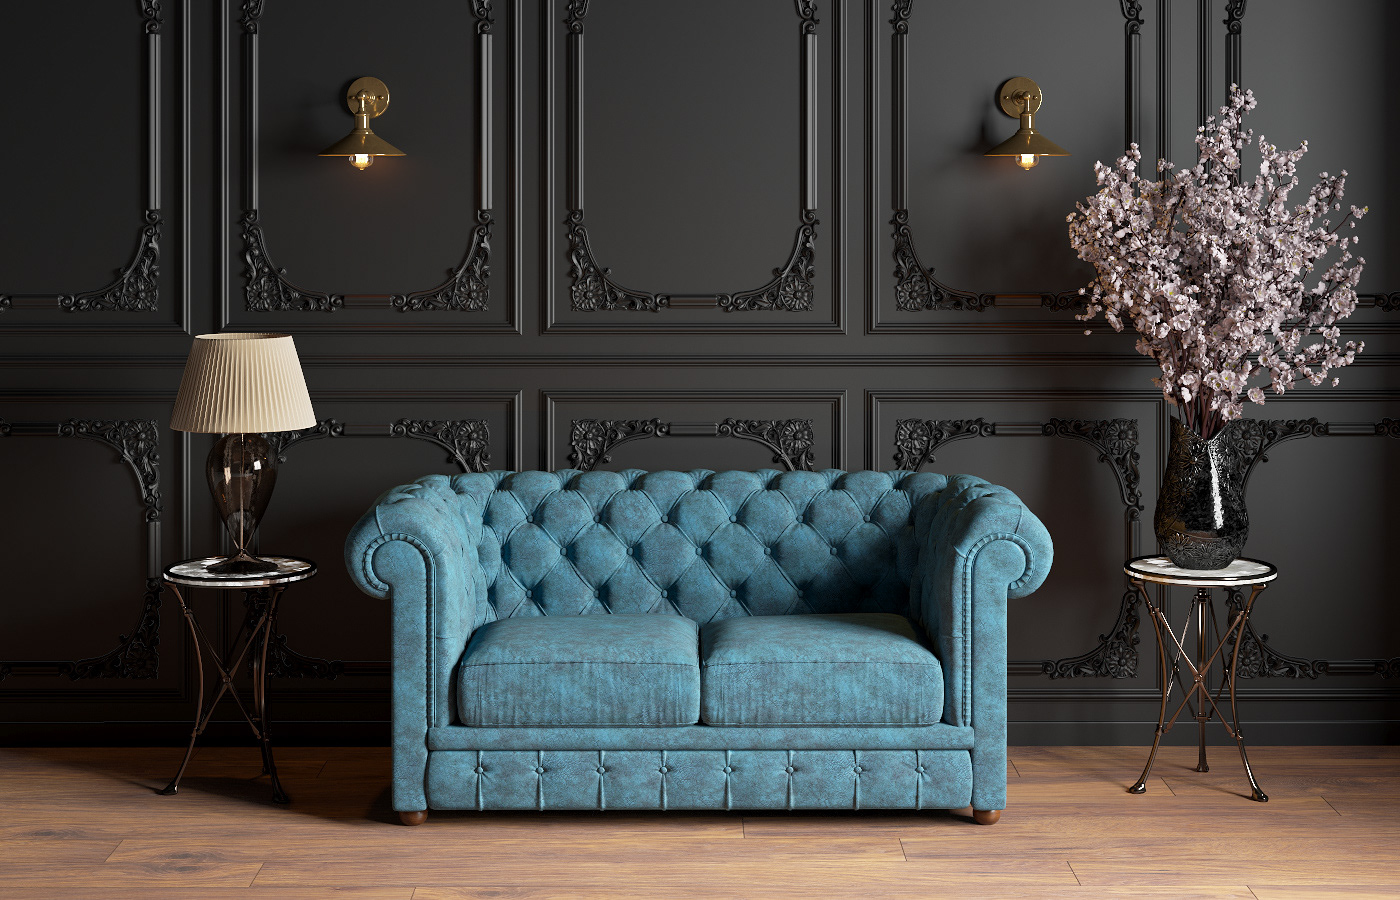 Chester chesterfield Interior sofa Render furniture dark